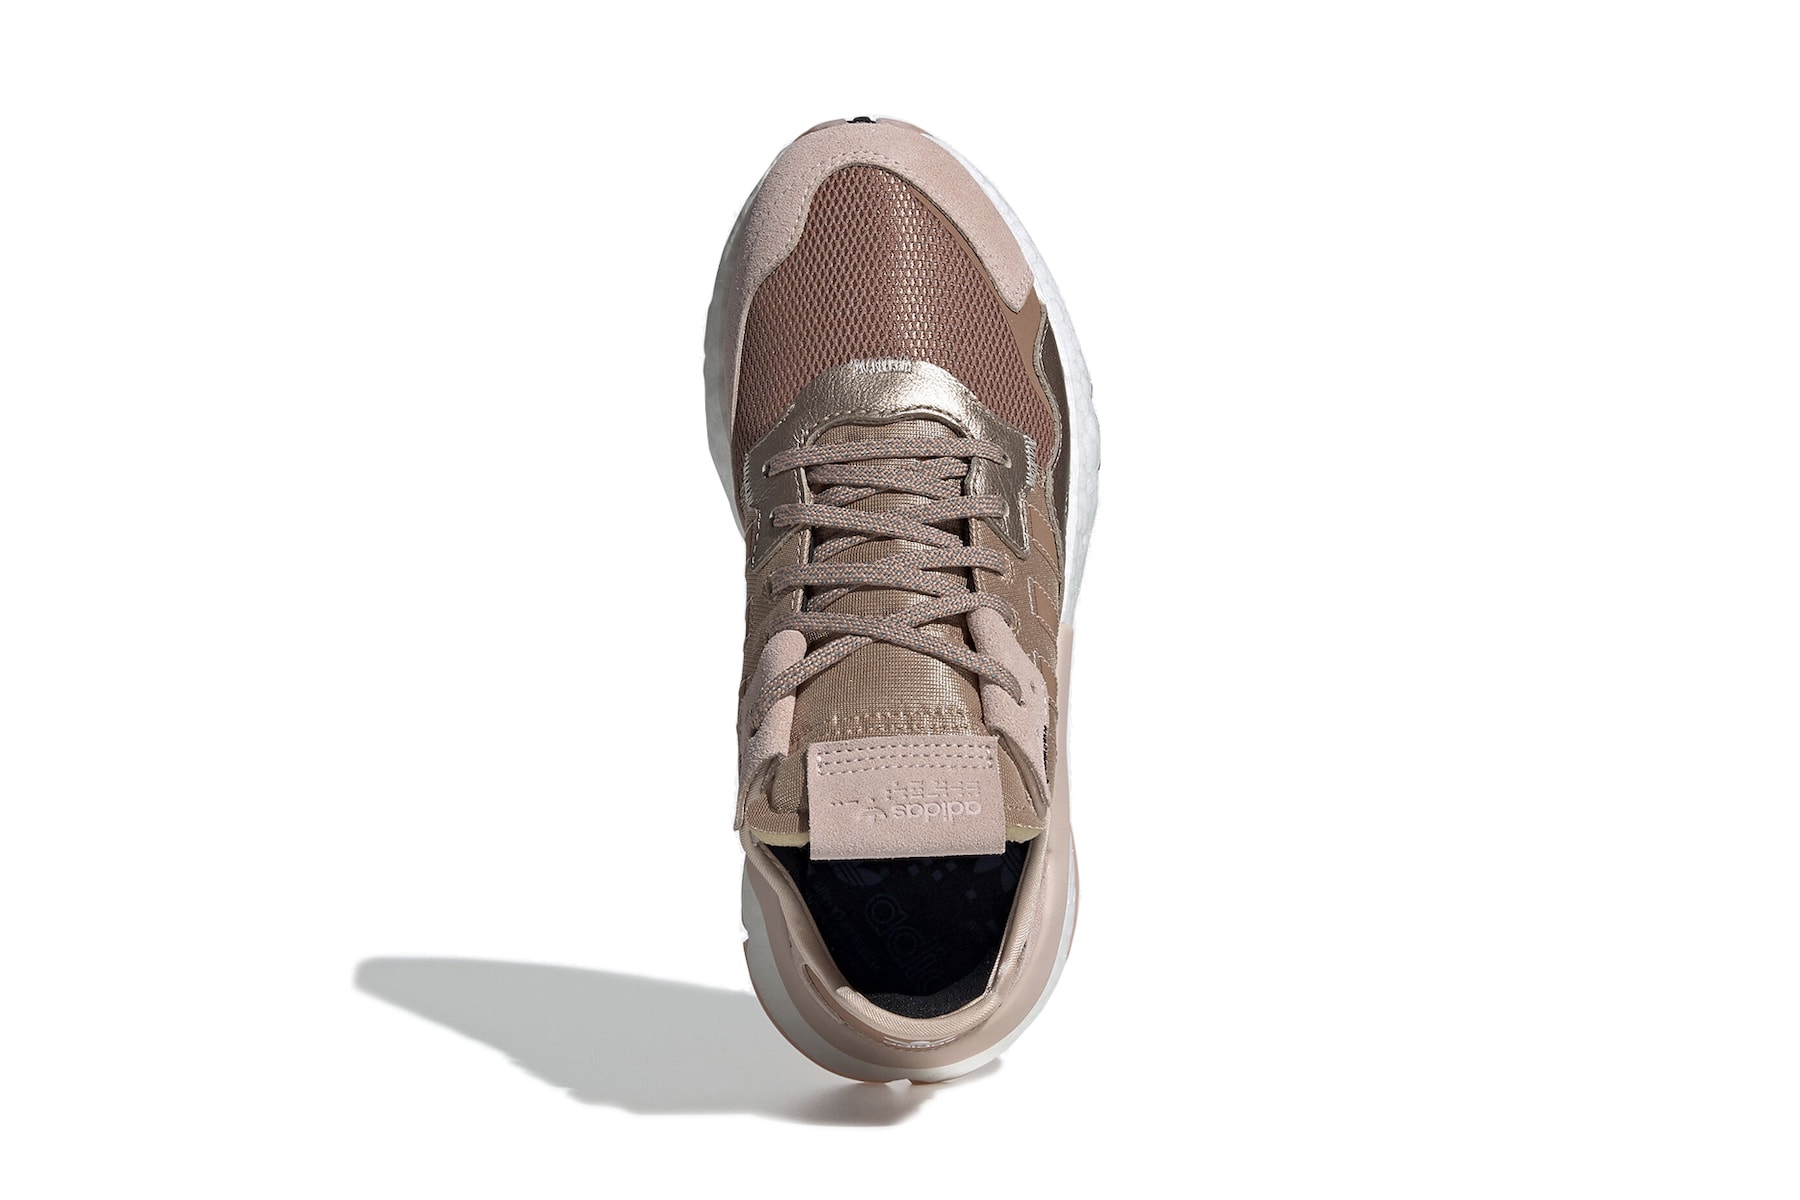 adidas Nite Jogger Metallic Rose Gold Pink Shoe Sneaker Trainer Footwear Runner Boost Shin